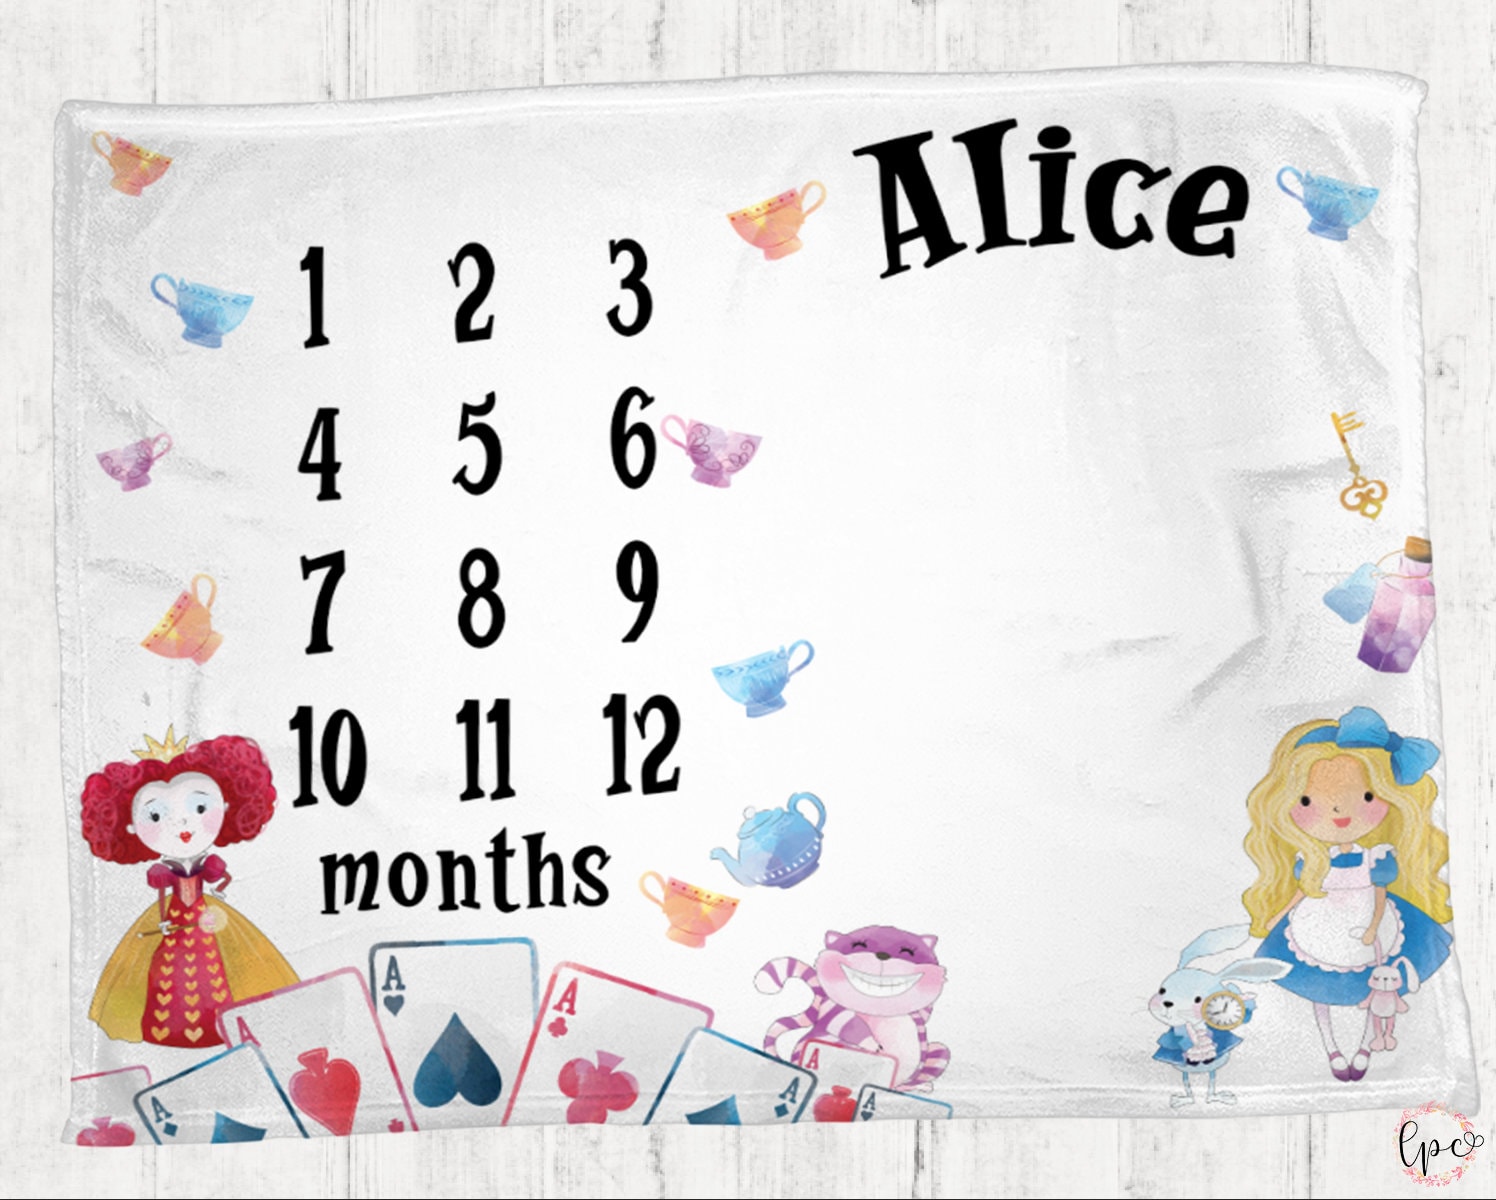 Alice In Wonderland Baby Nursery Minky Blanket Infant Disney Cheshire Cat  White Rabbit Throw 50x60